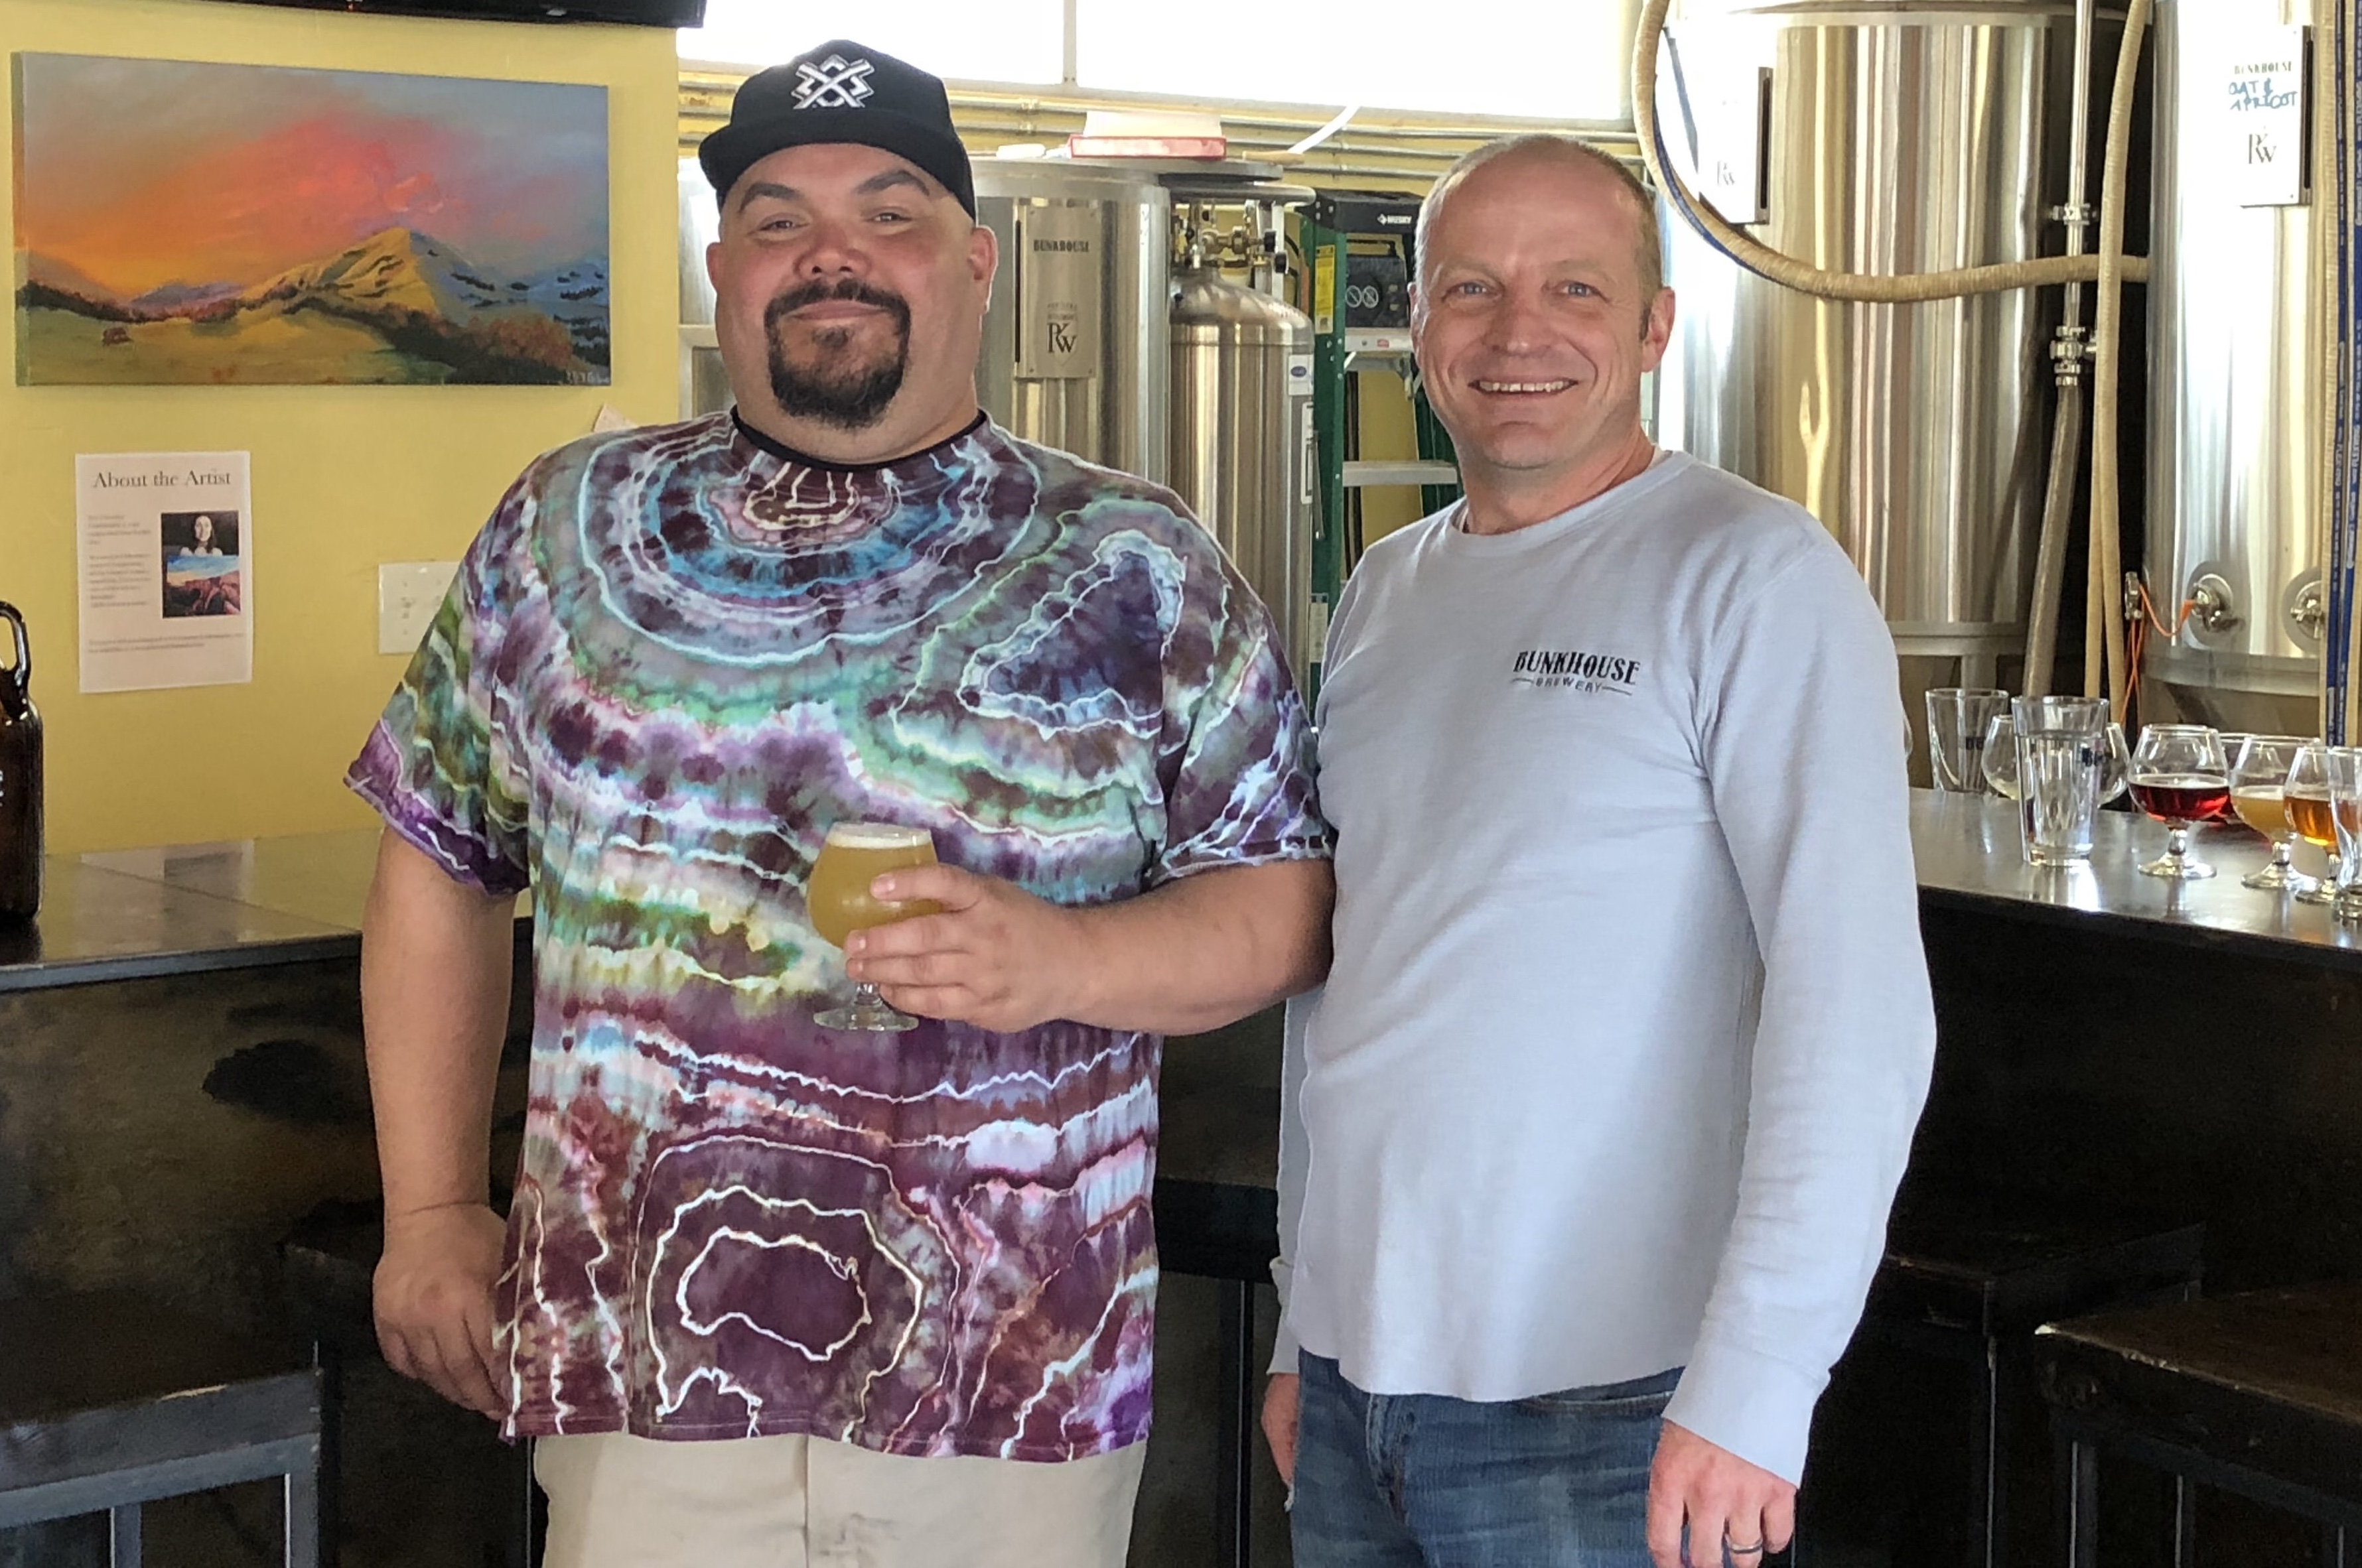 Nicholas Velasquez Bunkhouse Brewery - Portland Beer Podcast episode 83 by Steven Shomler